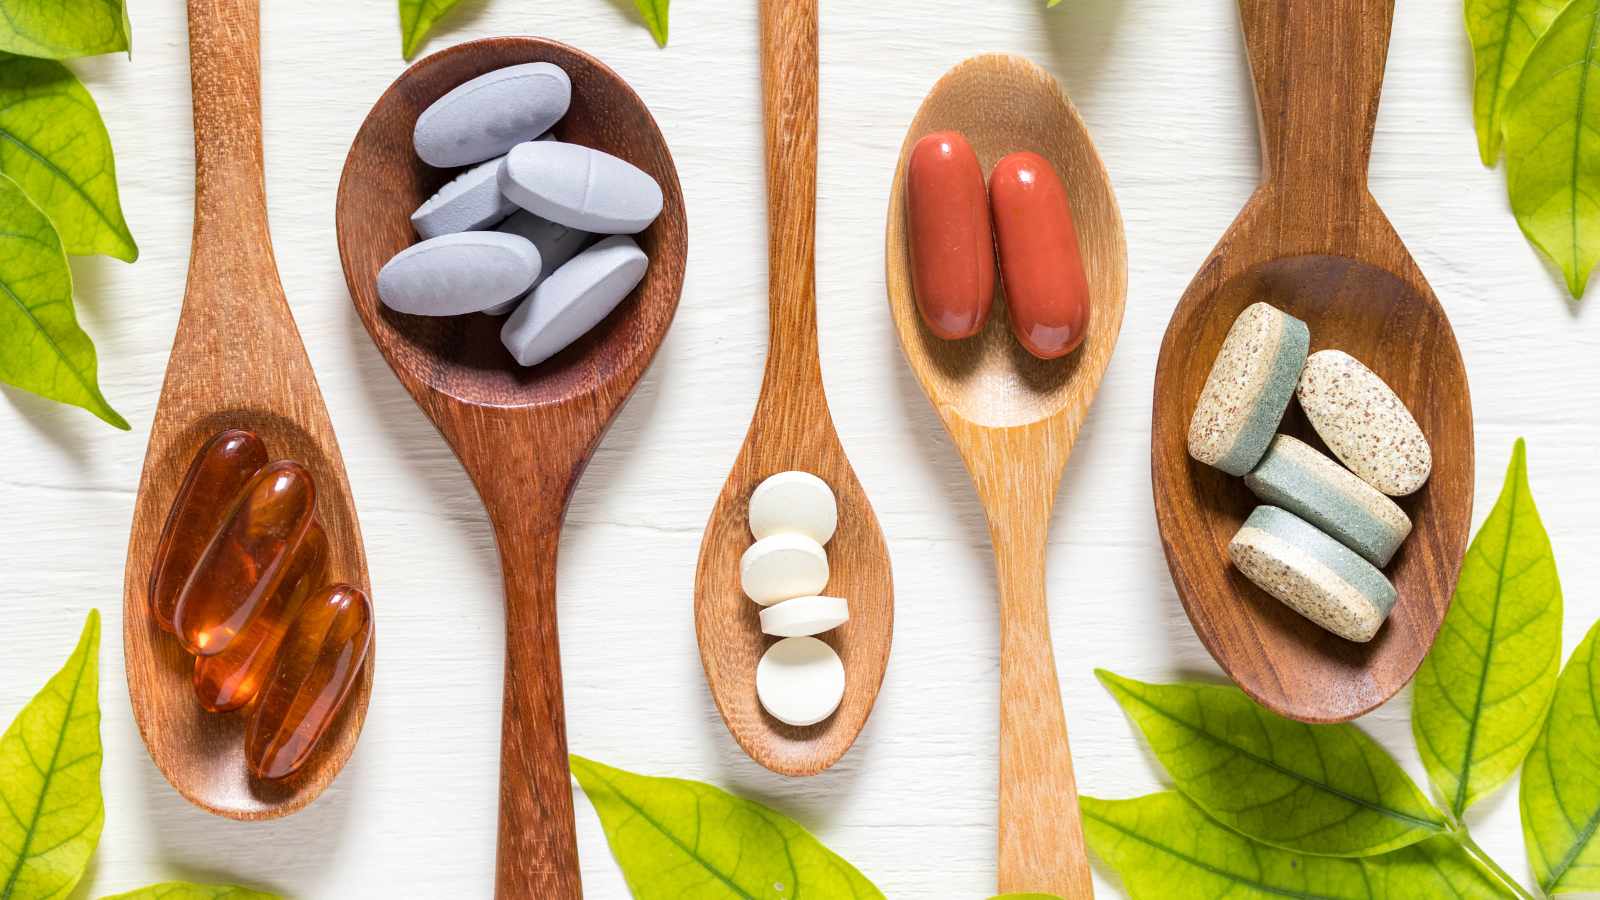 Health supplements